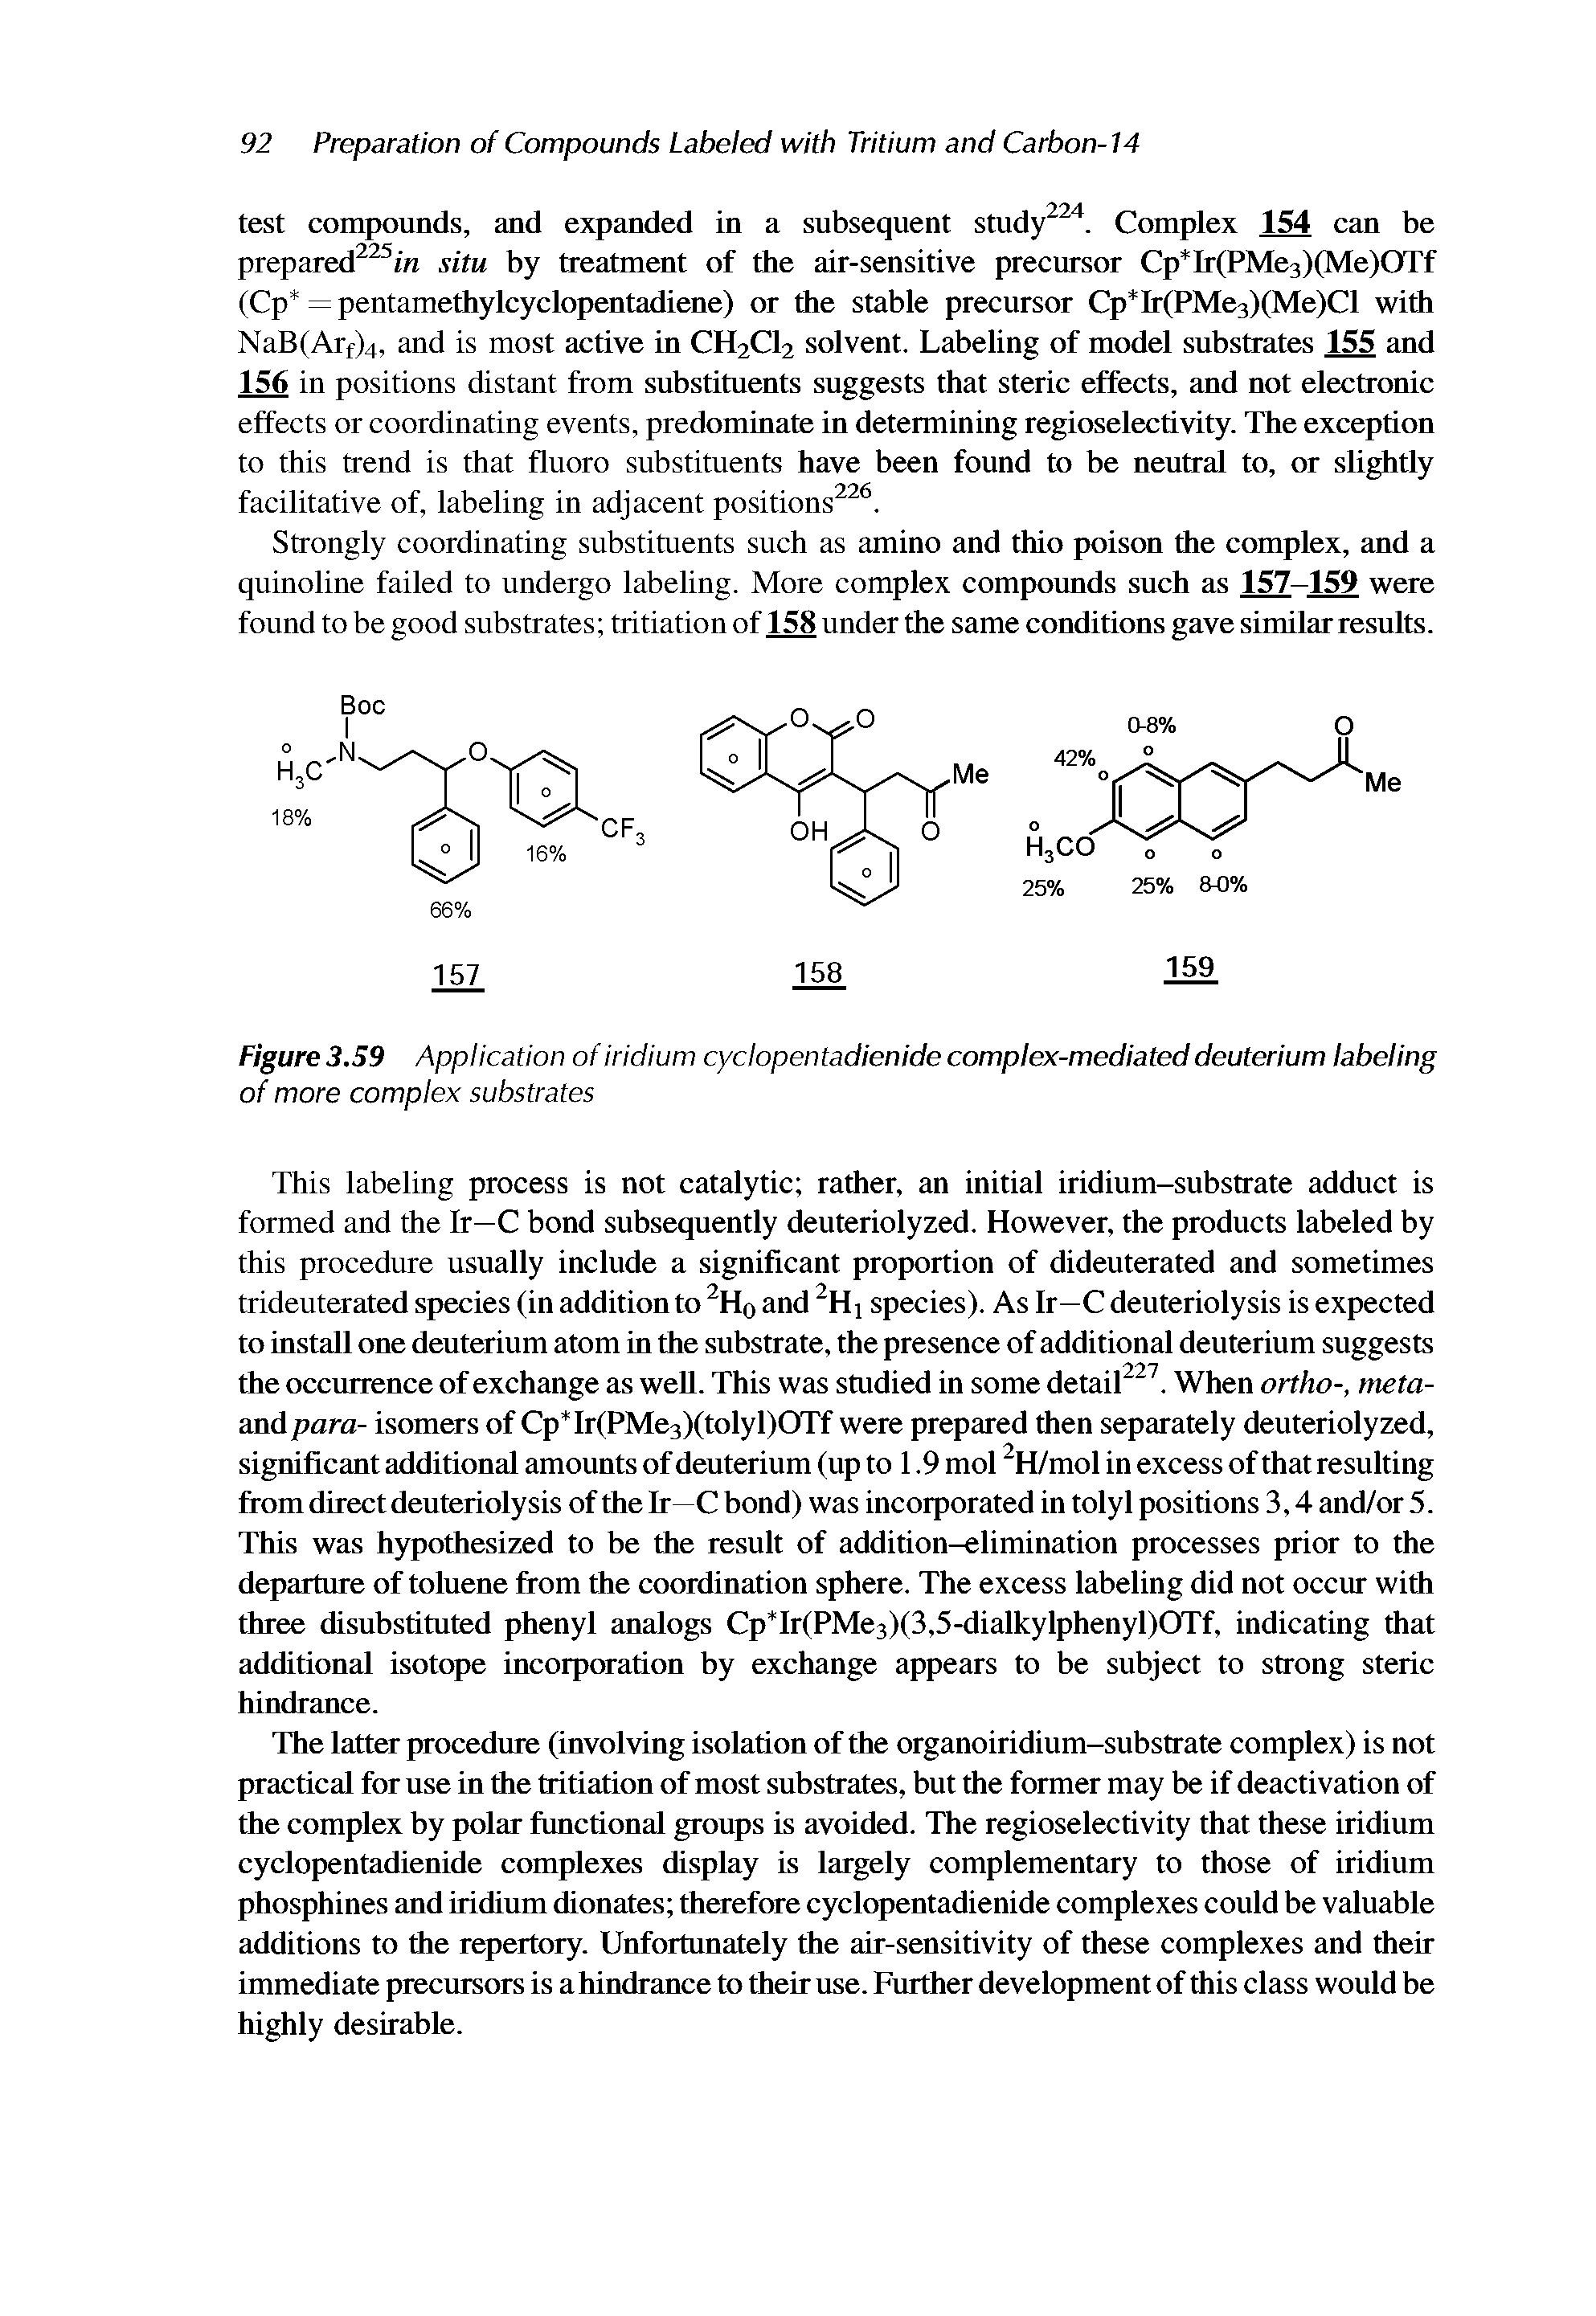 Figure 3.59 Application of iridium cyclopentadienide complex-mediated deuterium labeling of more complex substrates...